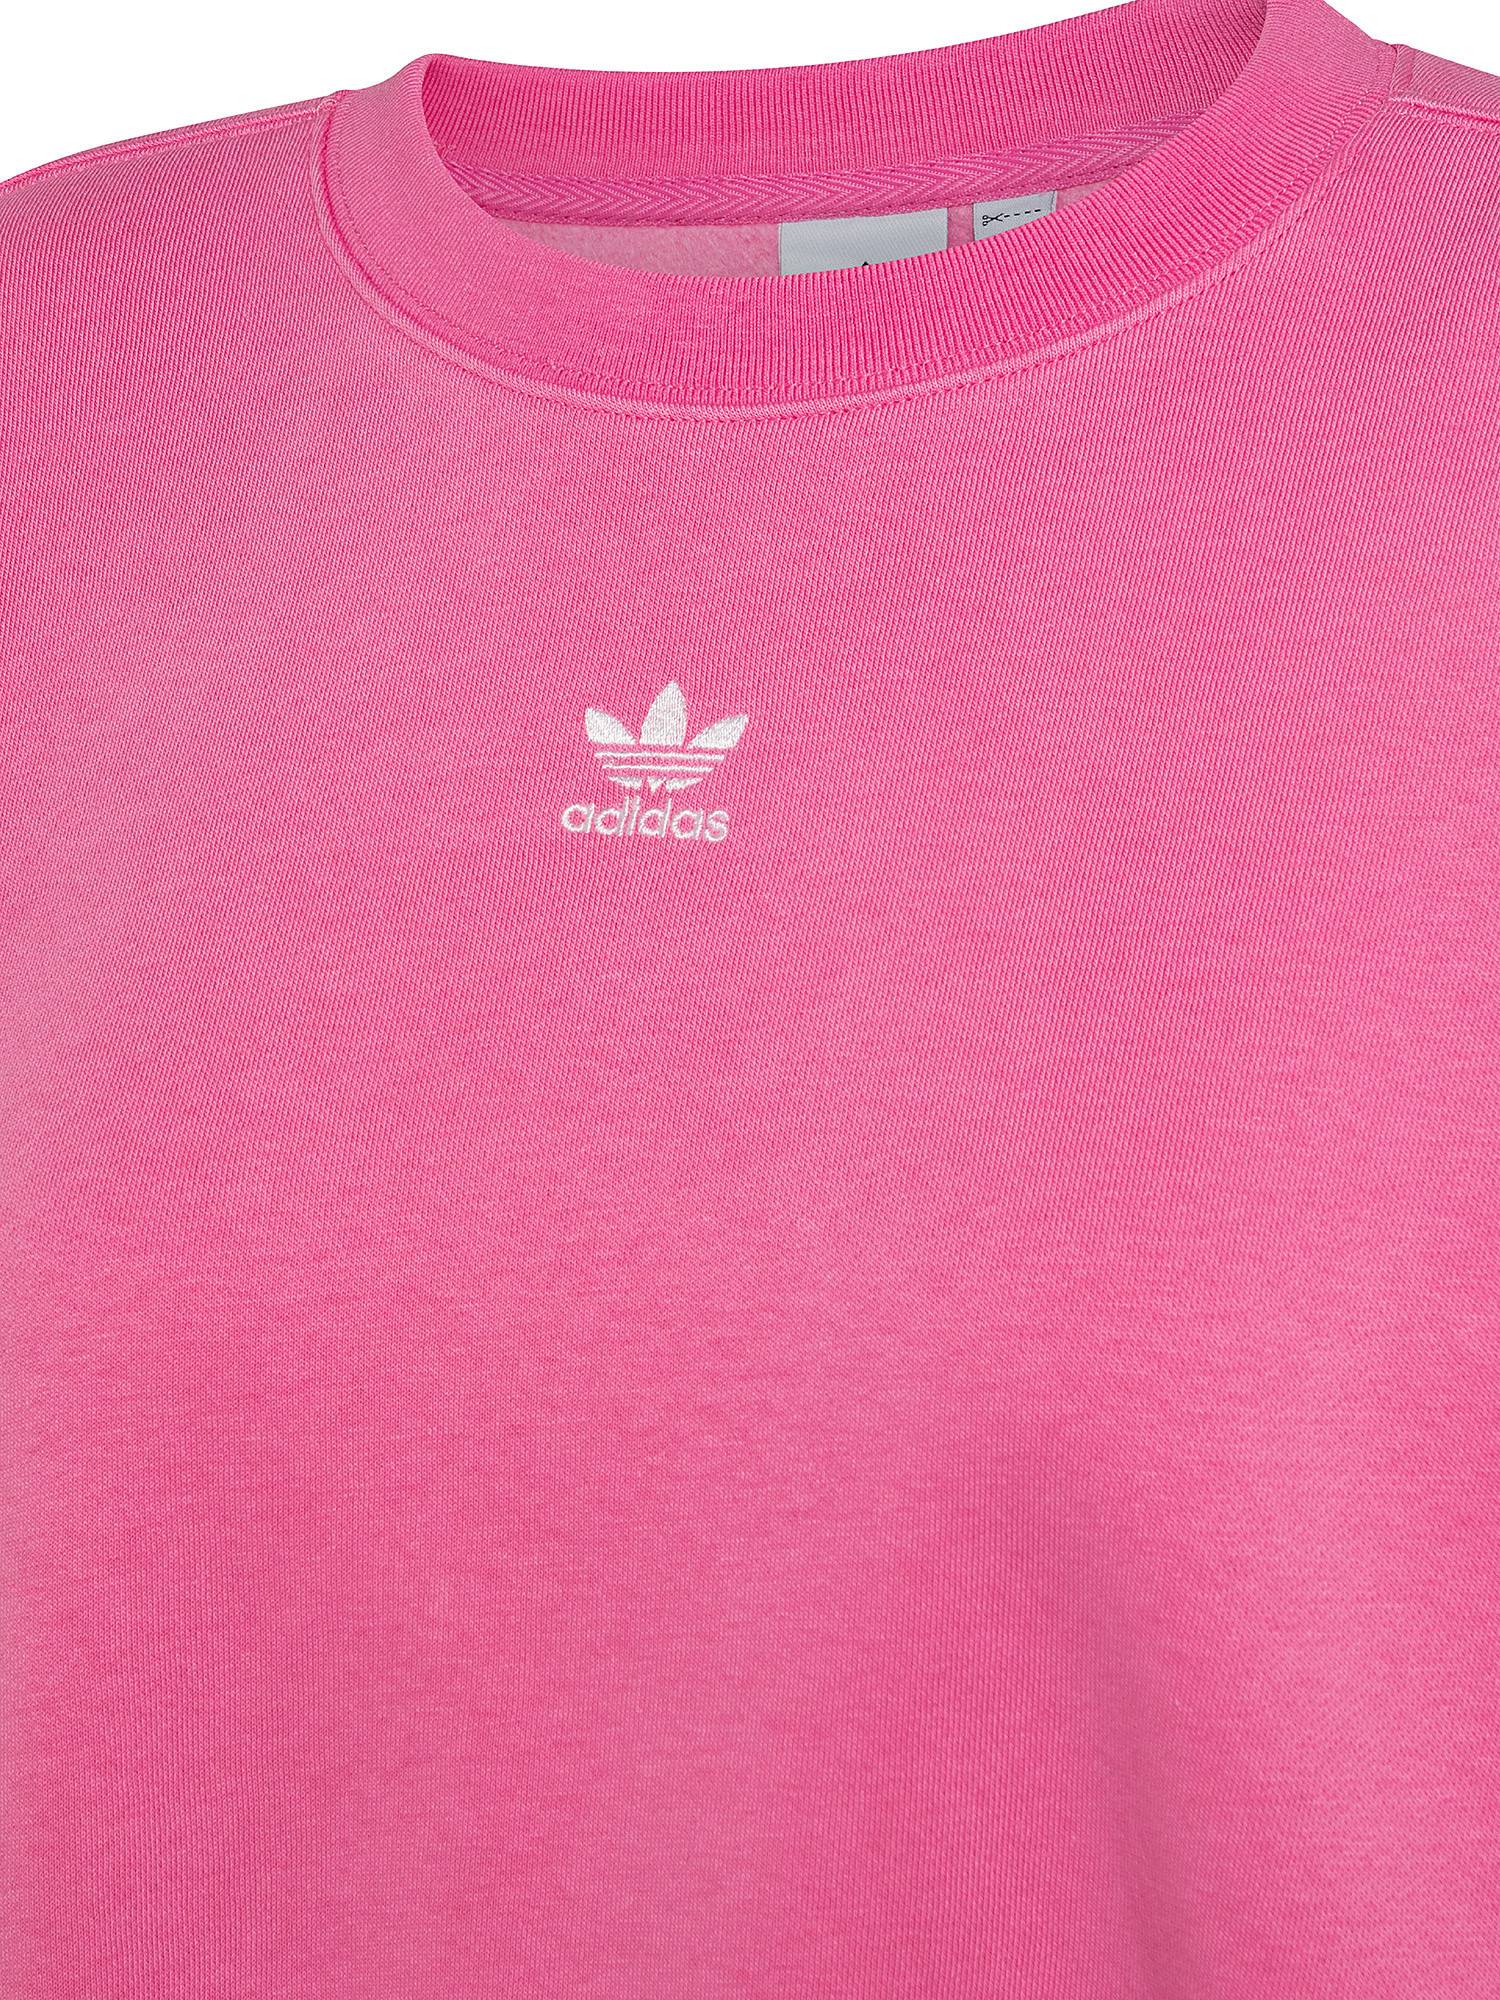 Adidas - Sweatshirt with logo, Pink, large image number 2